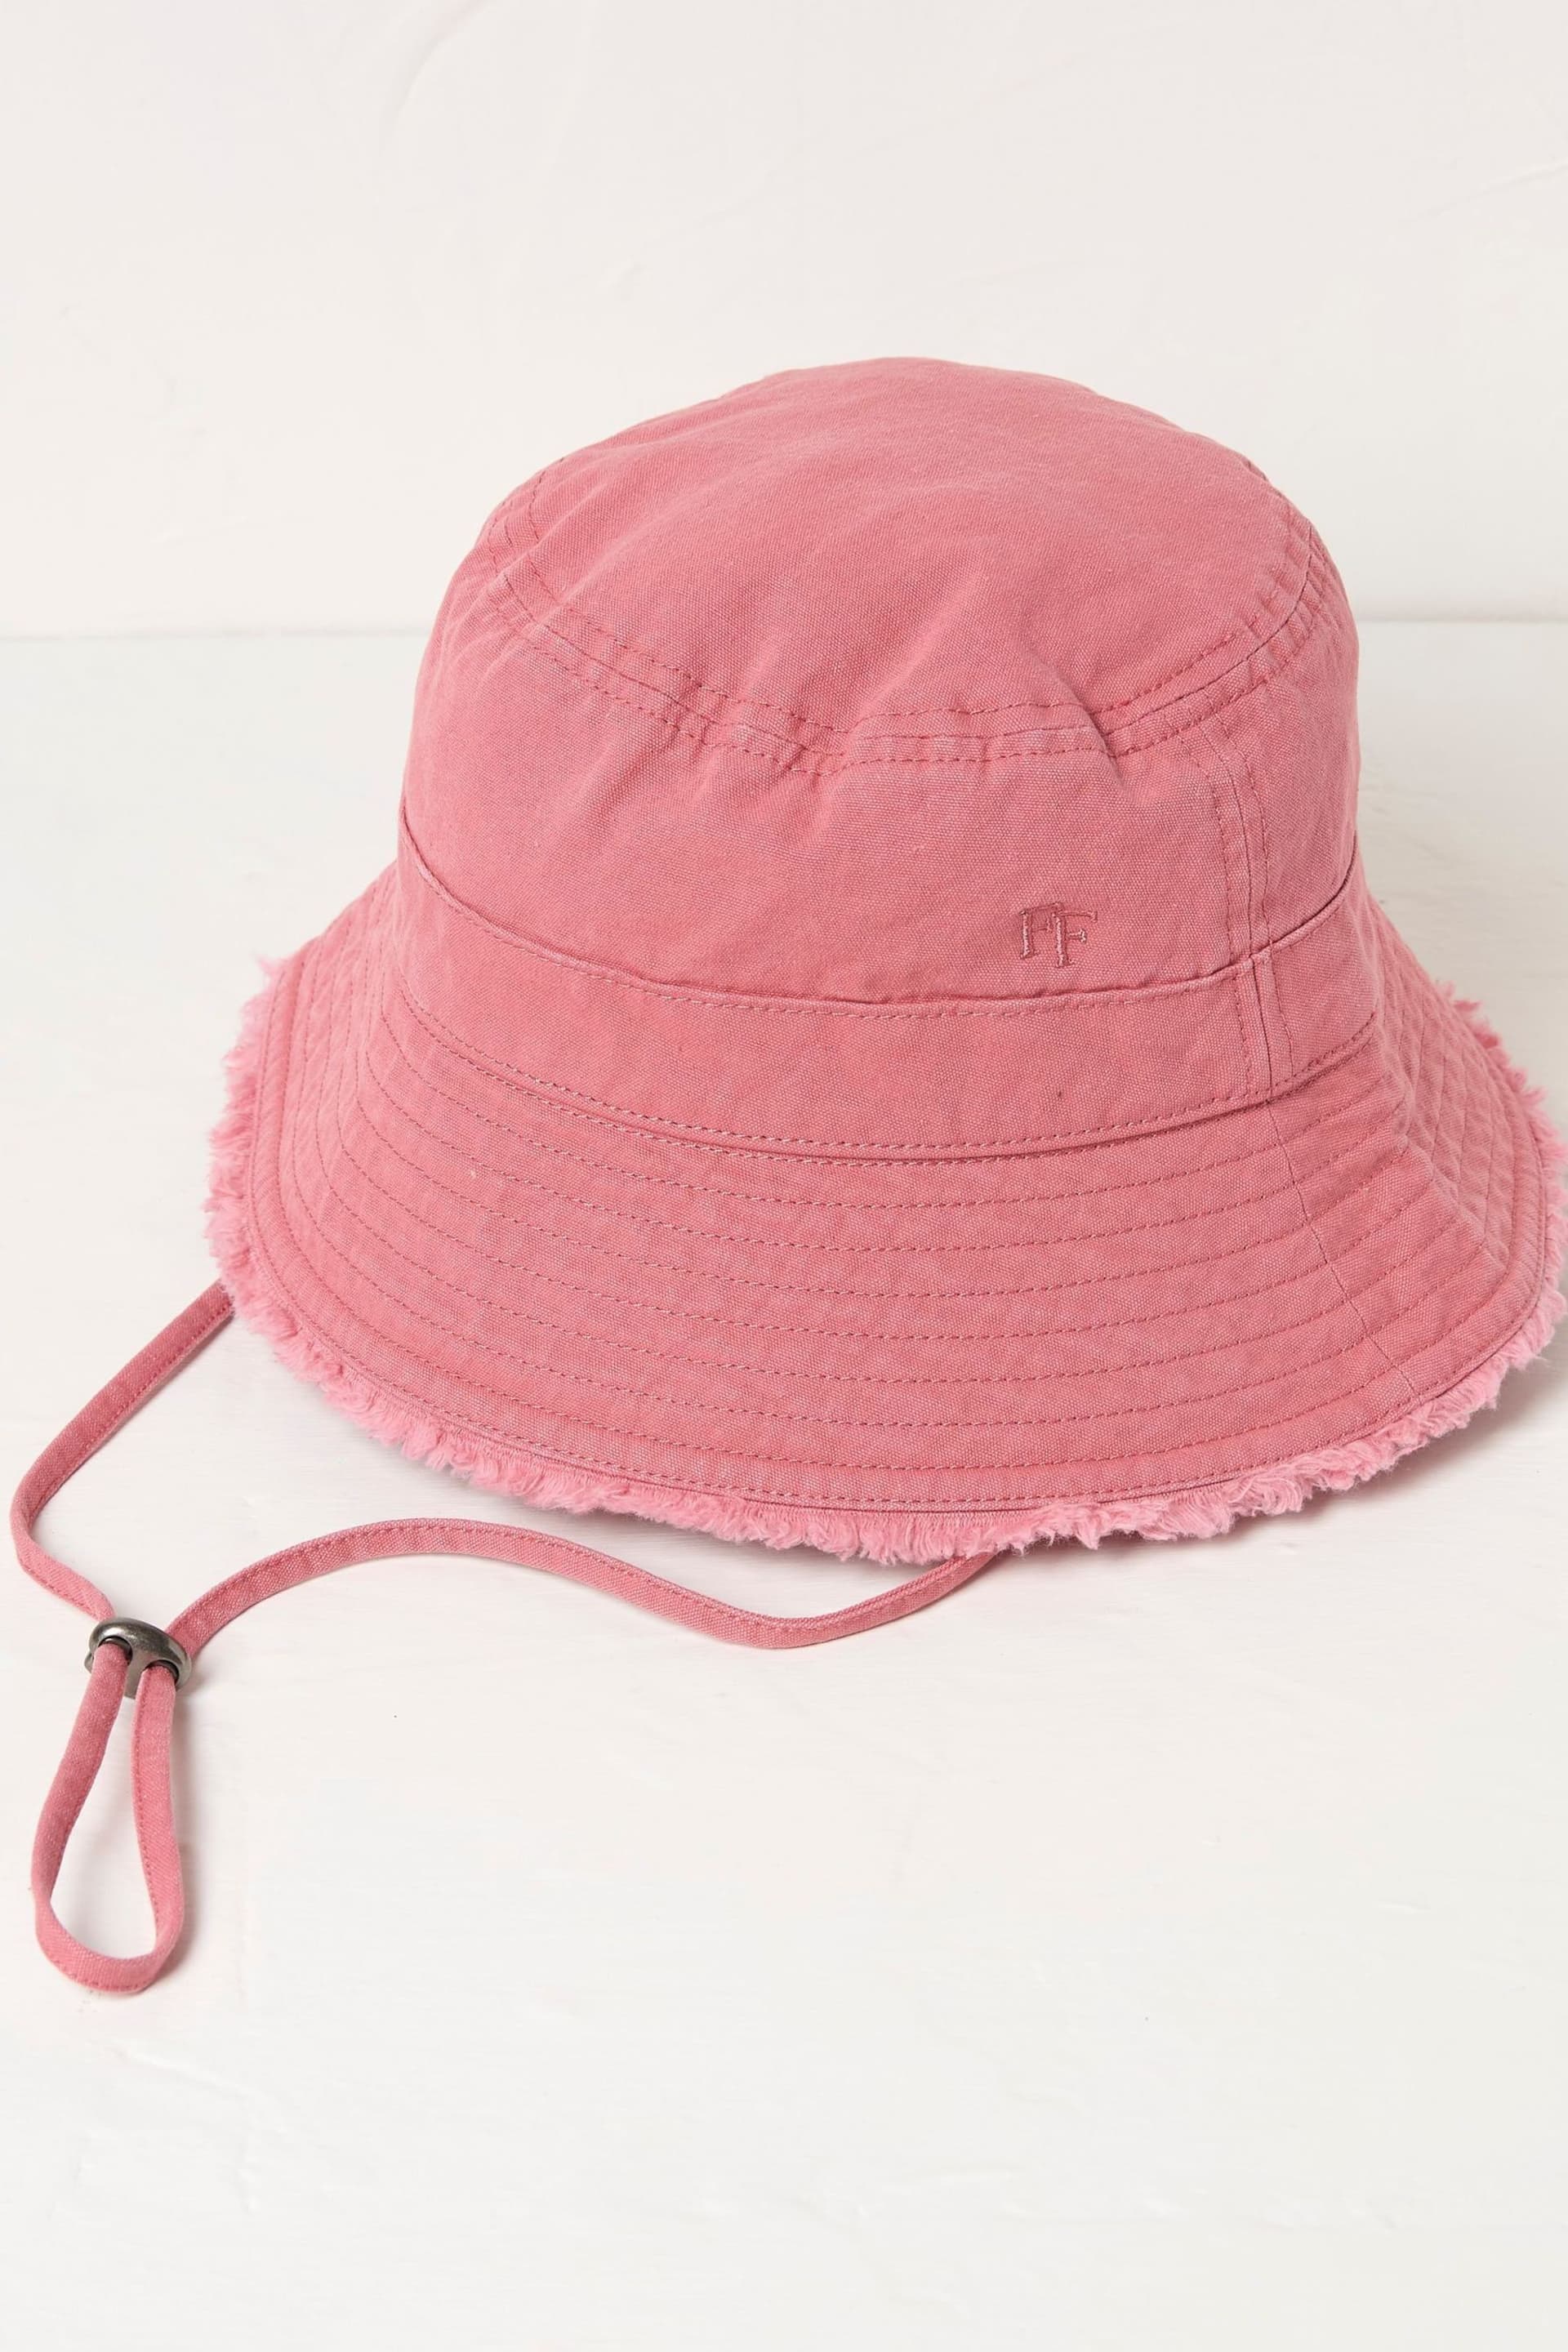 FatFace Pink Brisbane Bucket Hat - Image 2 of 3